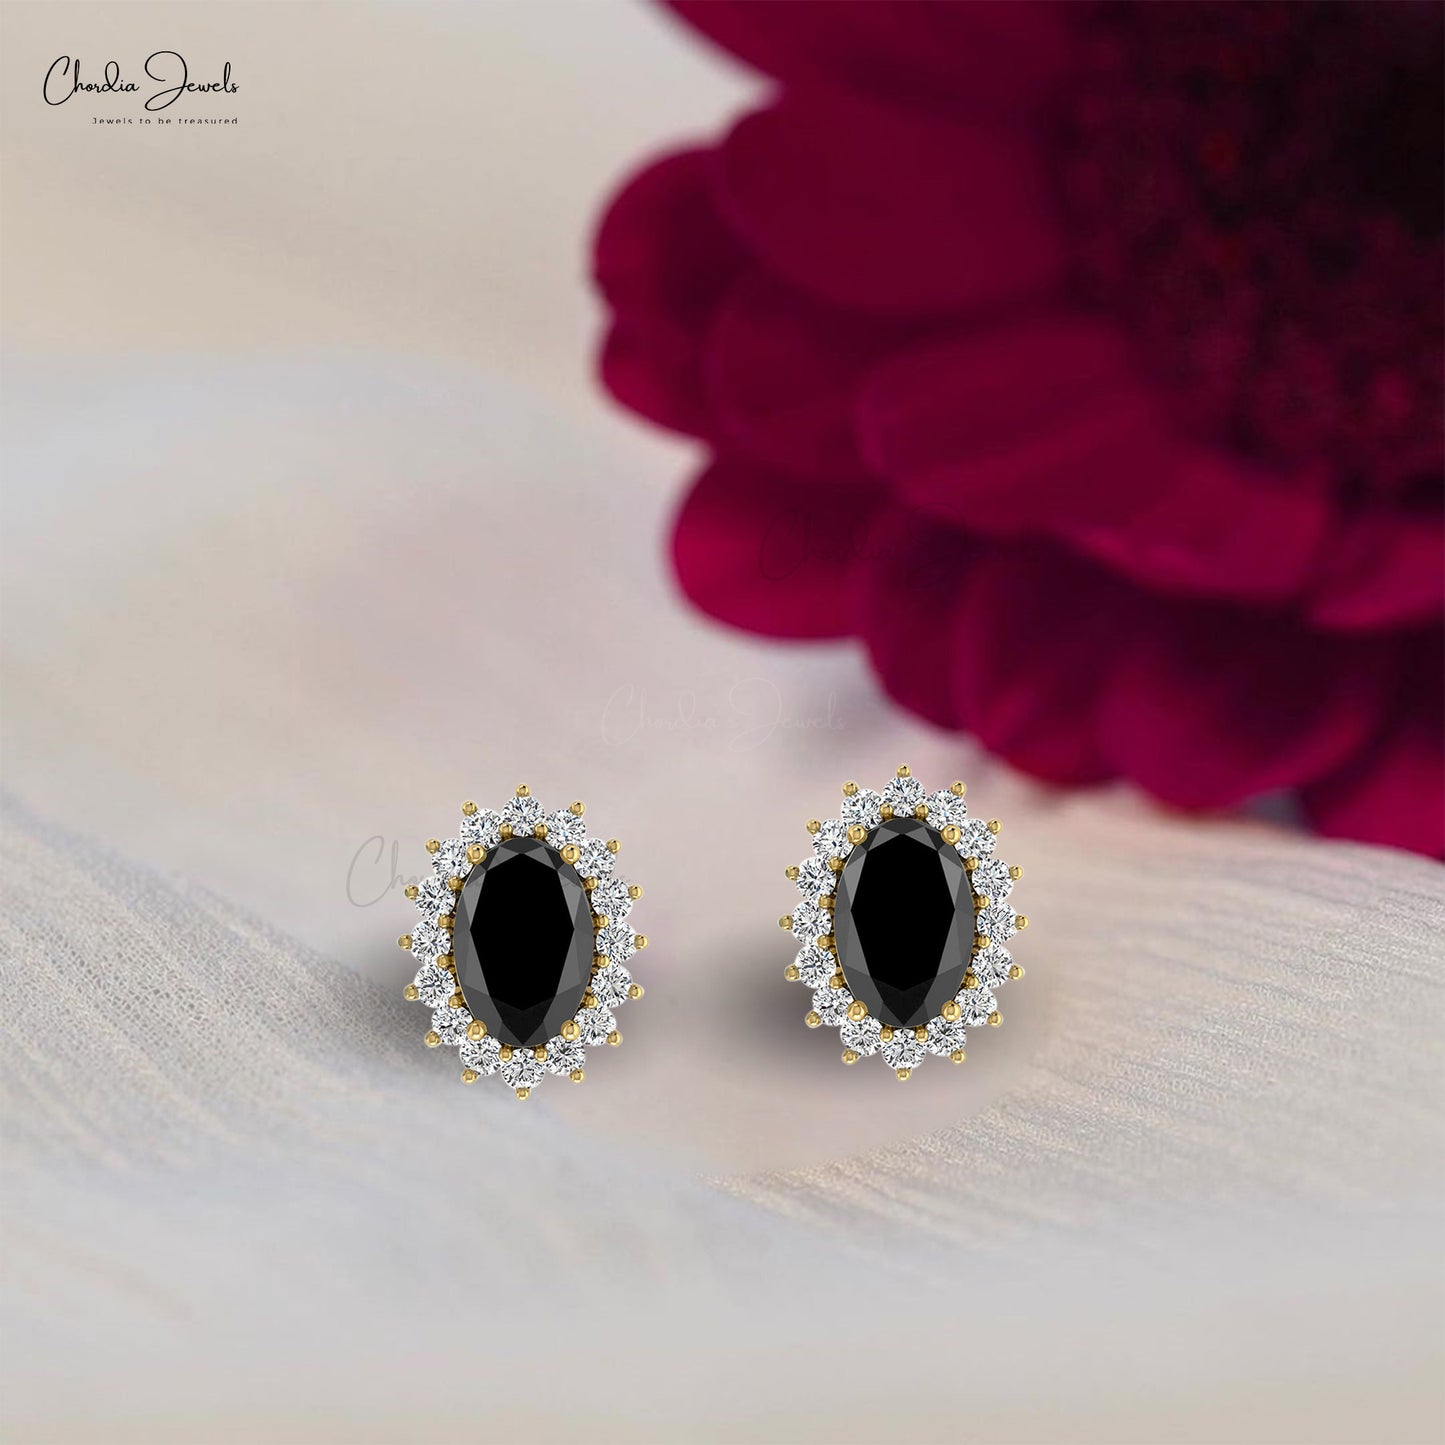 Natural Black Diamond Halo Earrings For Her 14k Real Gold White Diamond Earrings 6x4mm Oval Cut Gemstone Wedding Gift Earrings